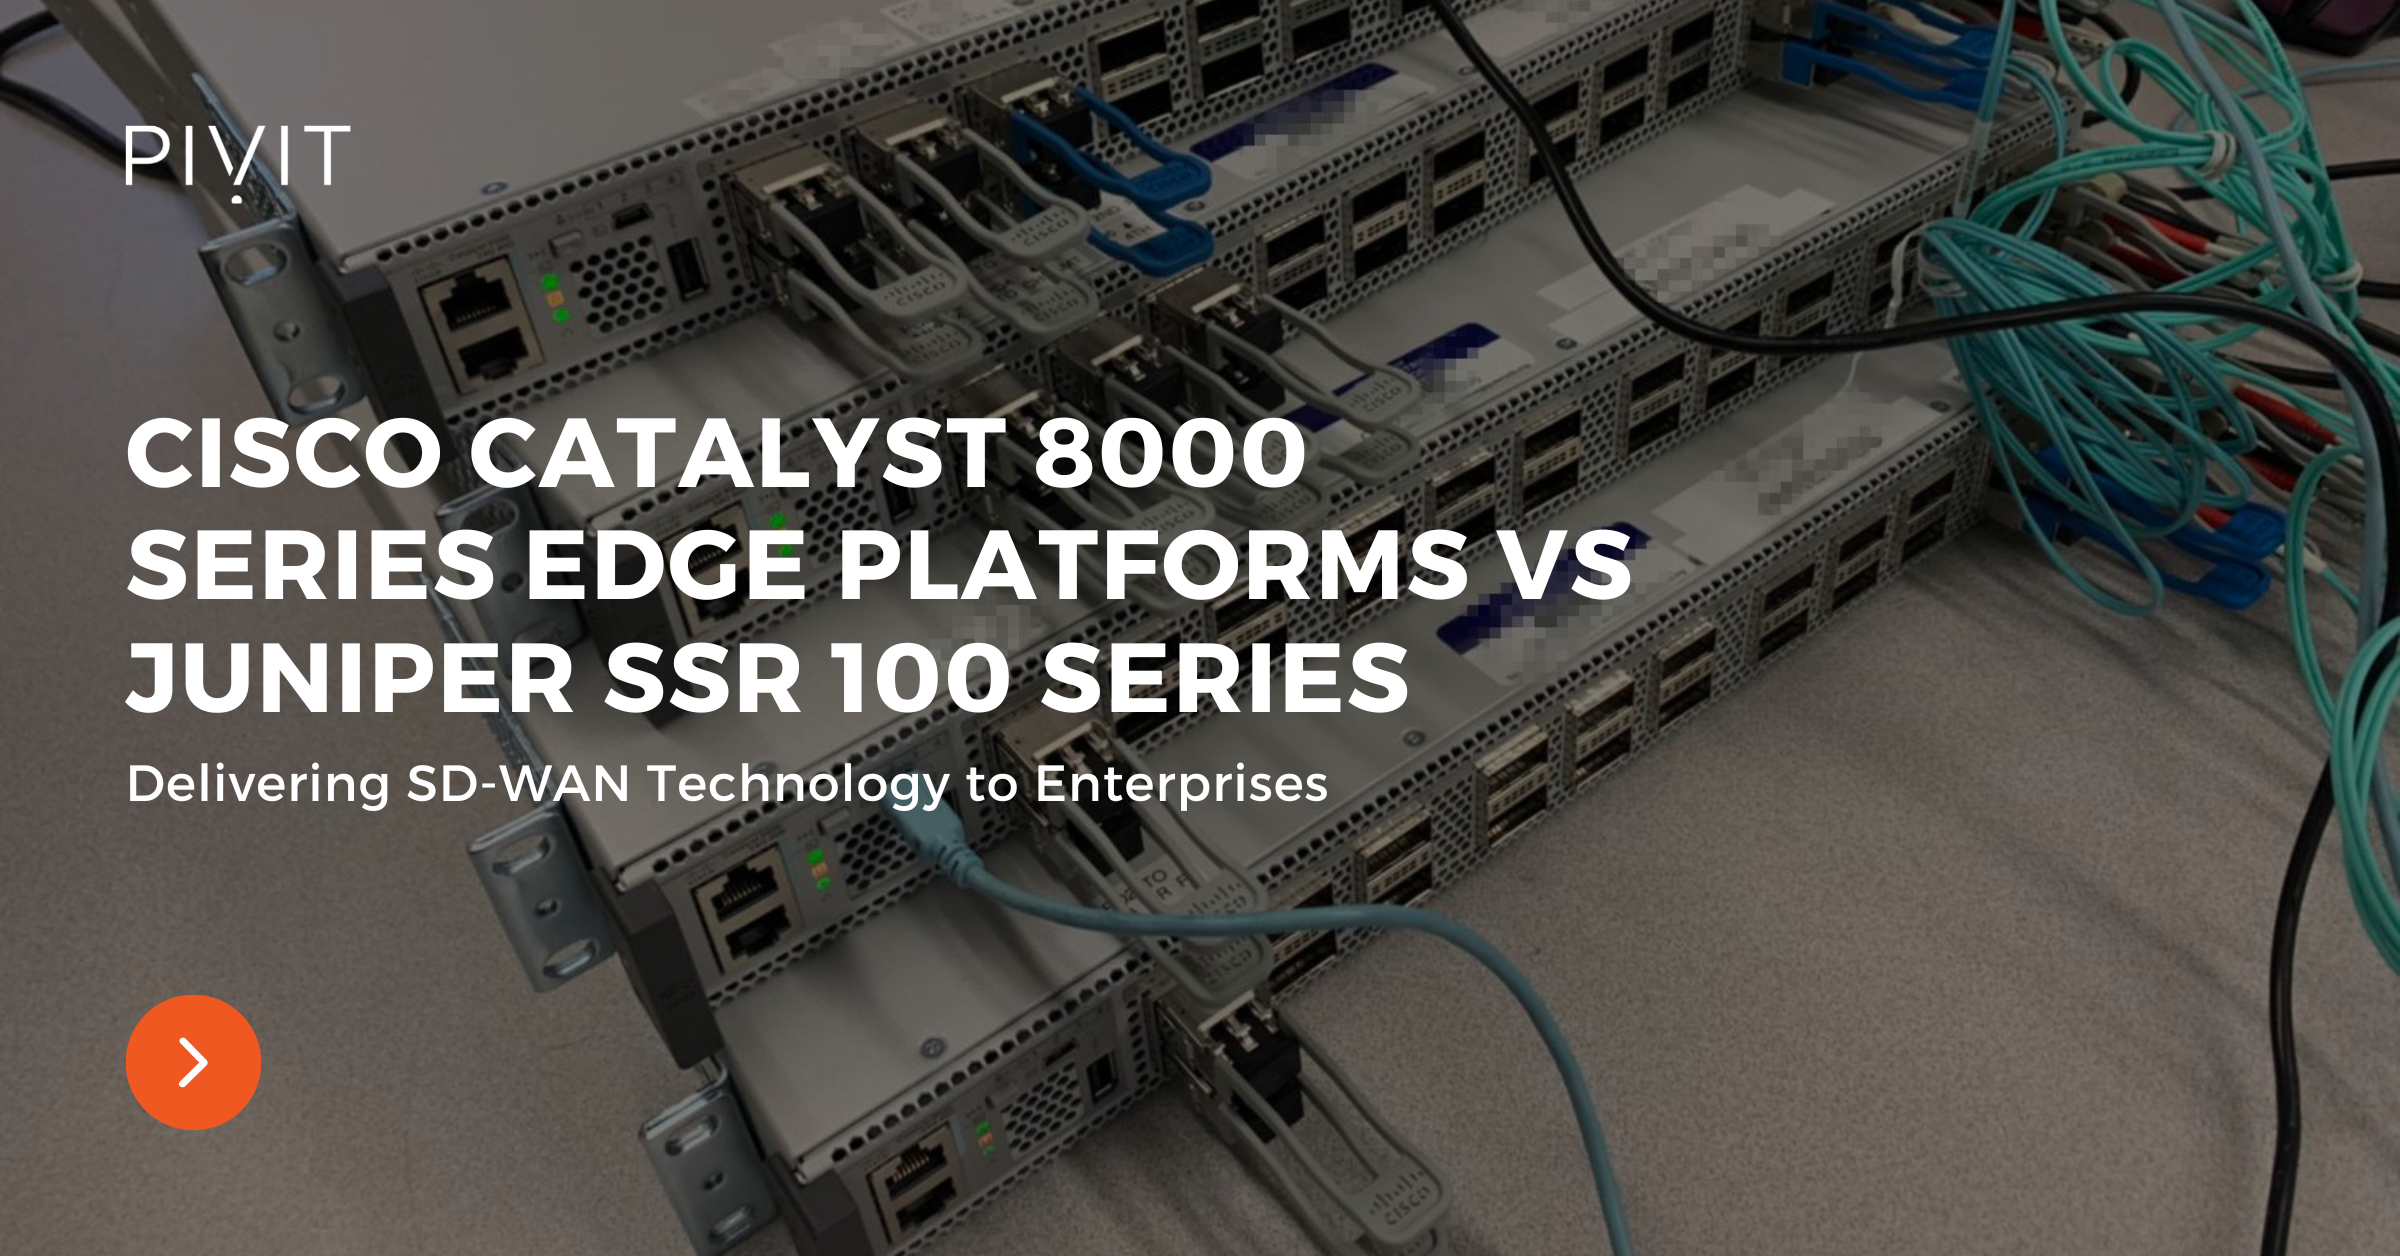 Cisco Catalyst 8000 Series Edge Platforms vs Juniper SSR 100 Series